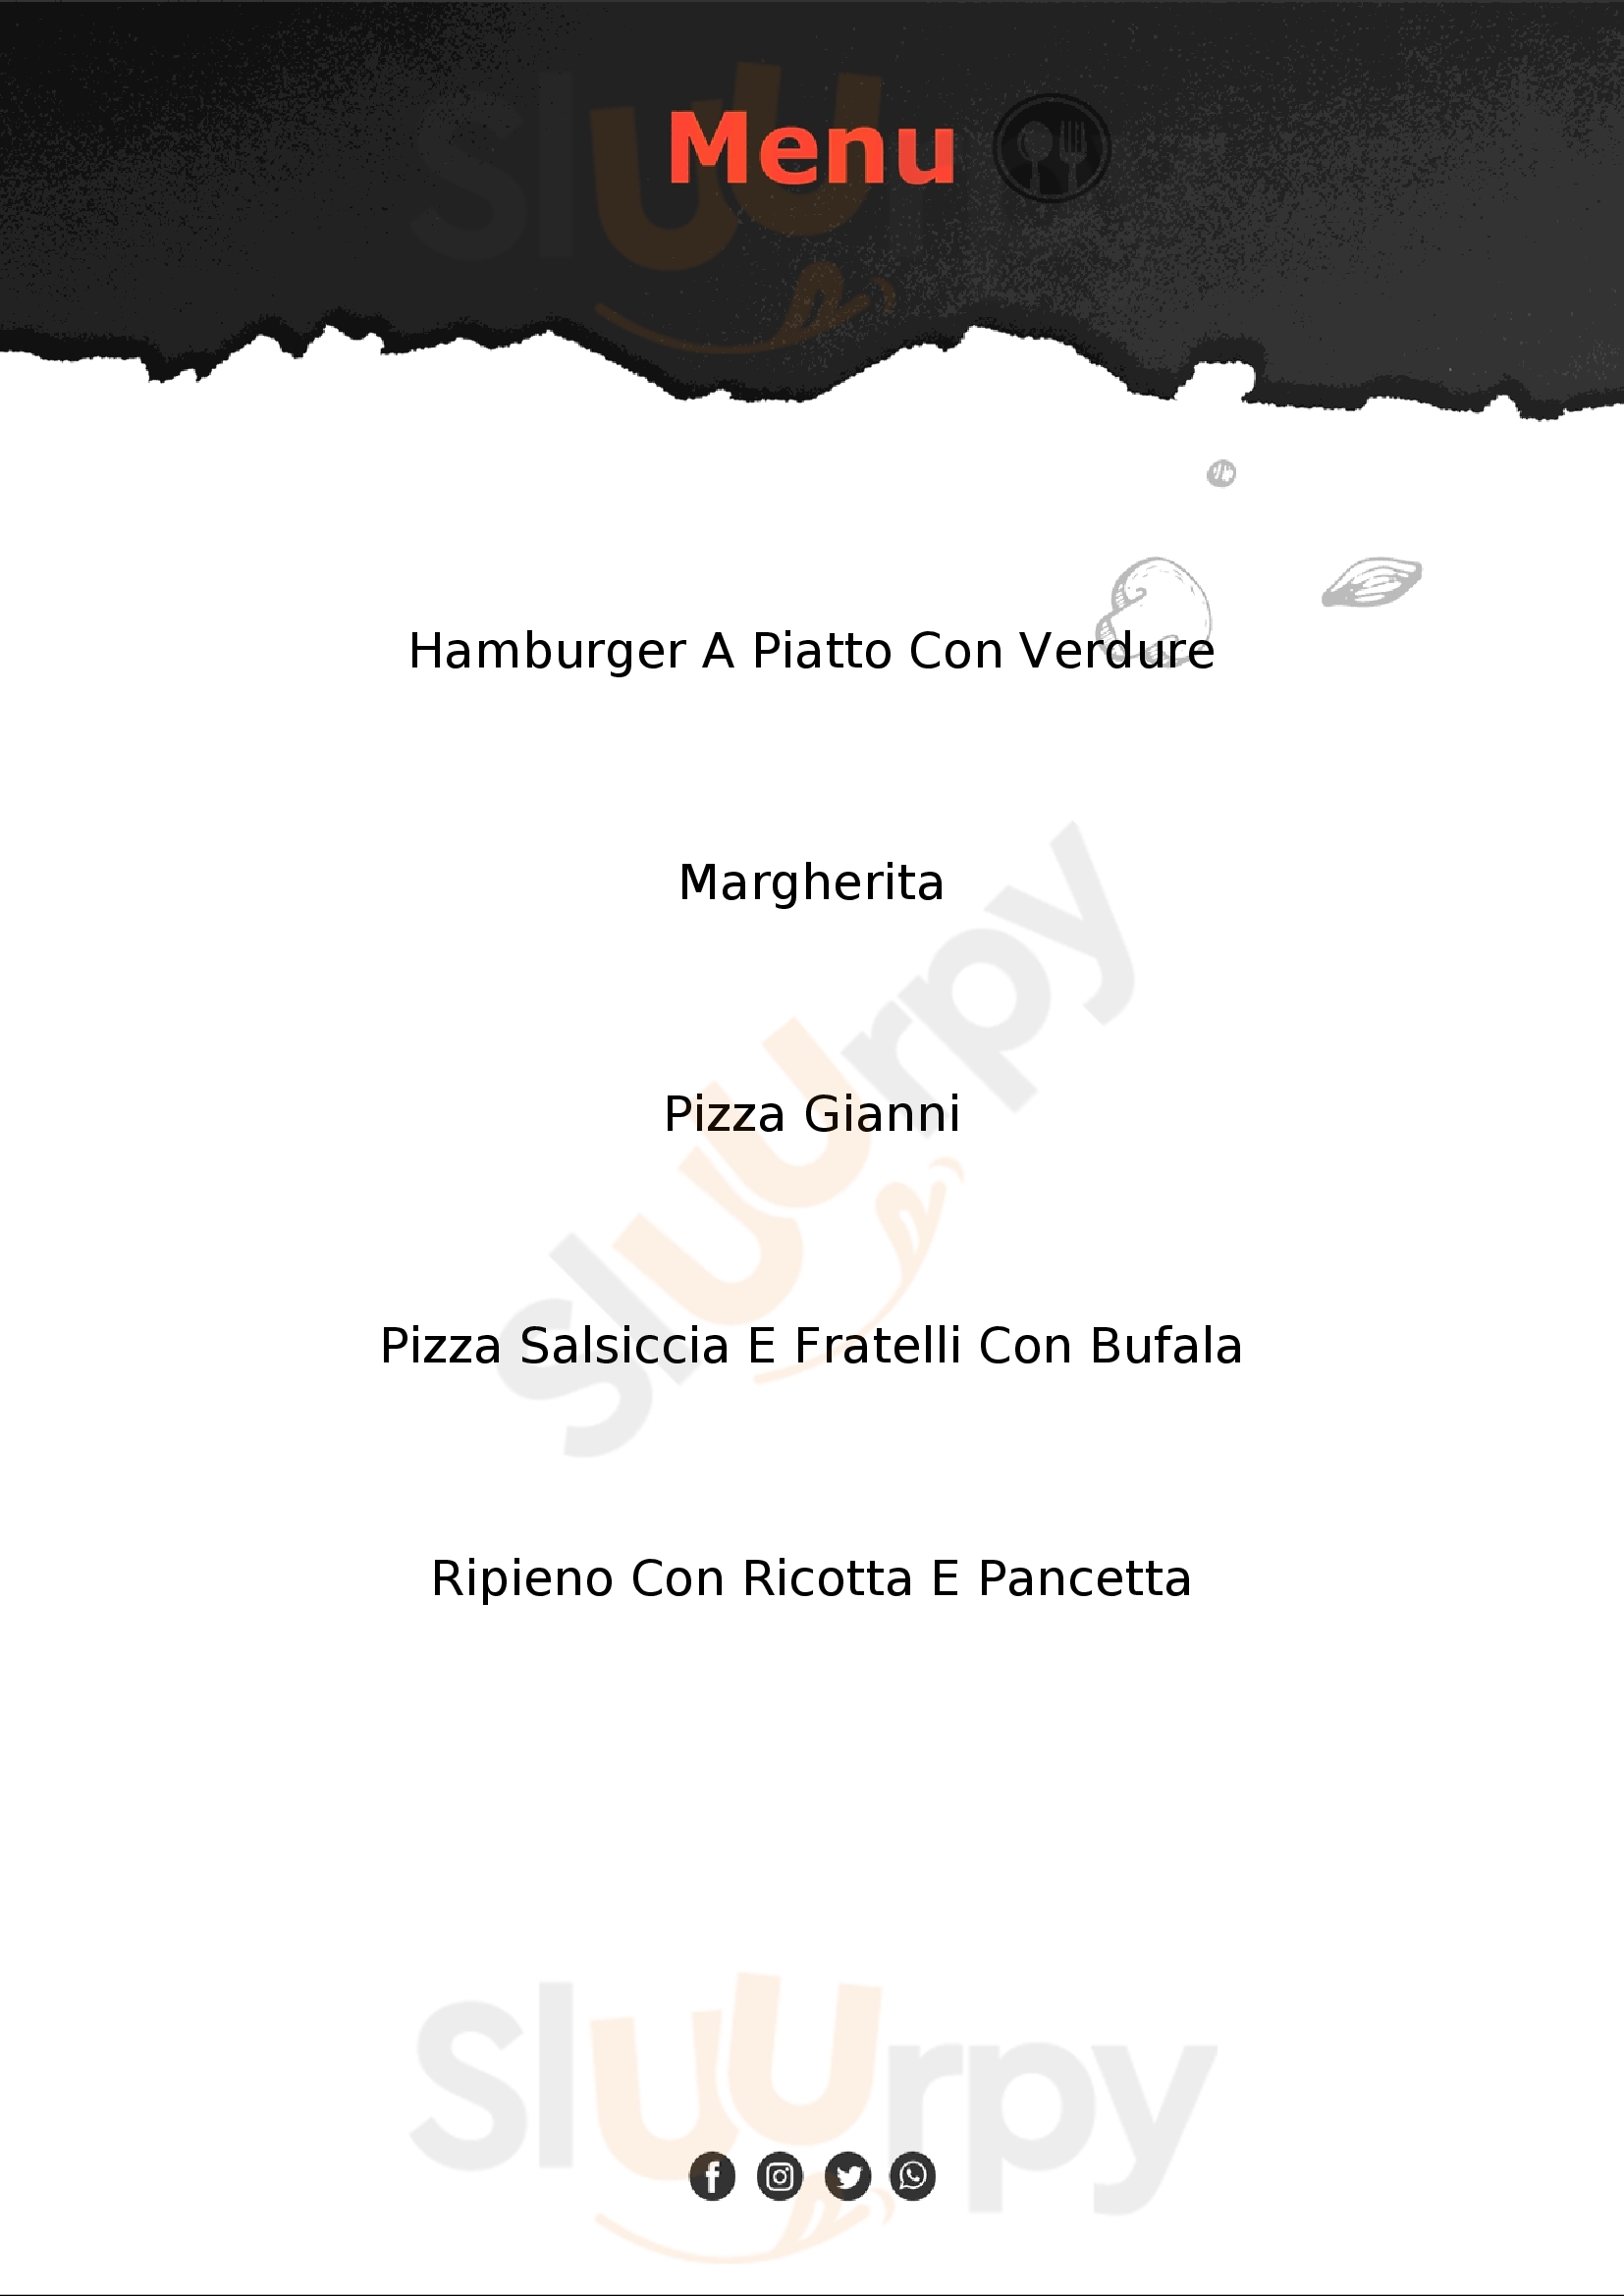 Il Vagabondo Pizzeria Paninoteca Marigliano menù 1 pagina